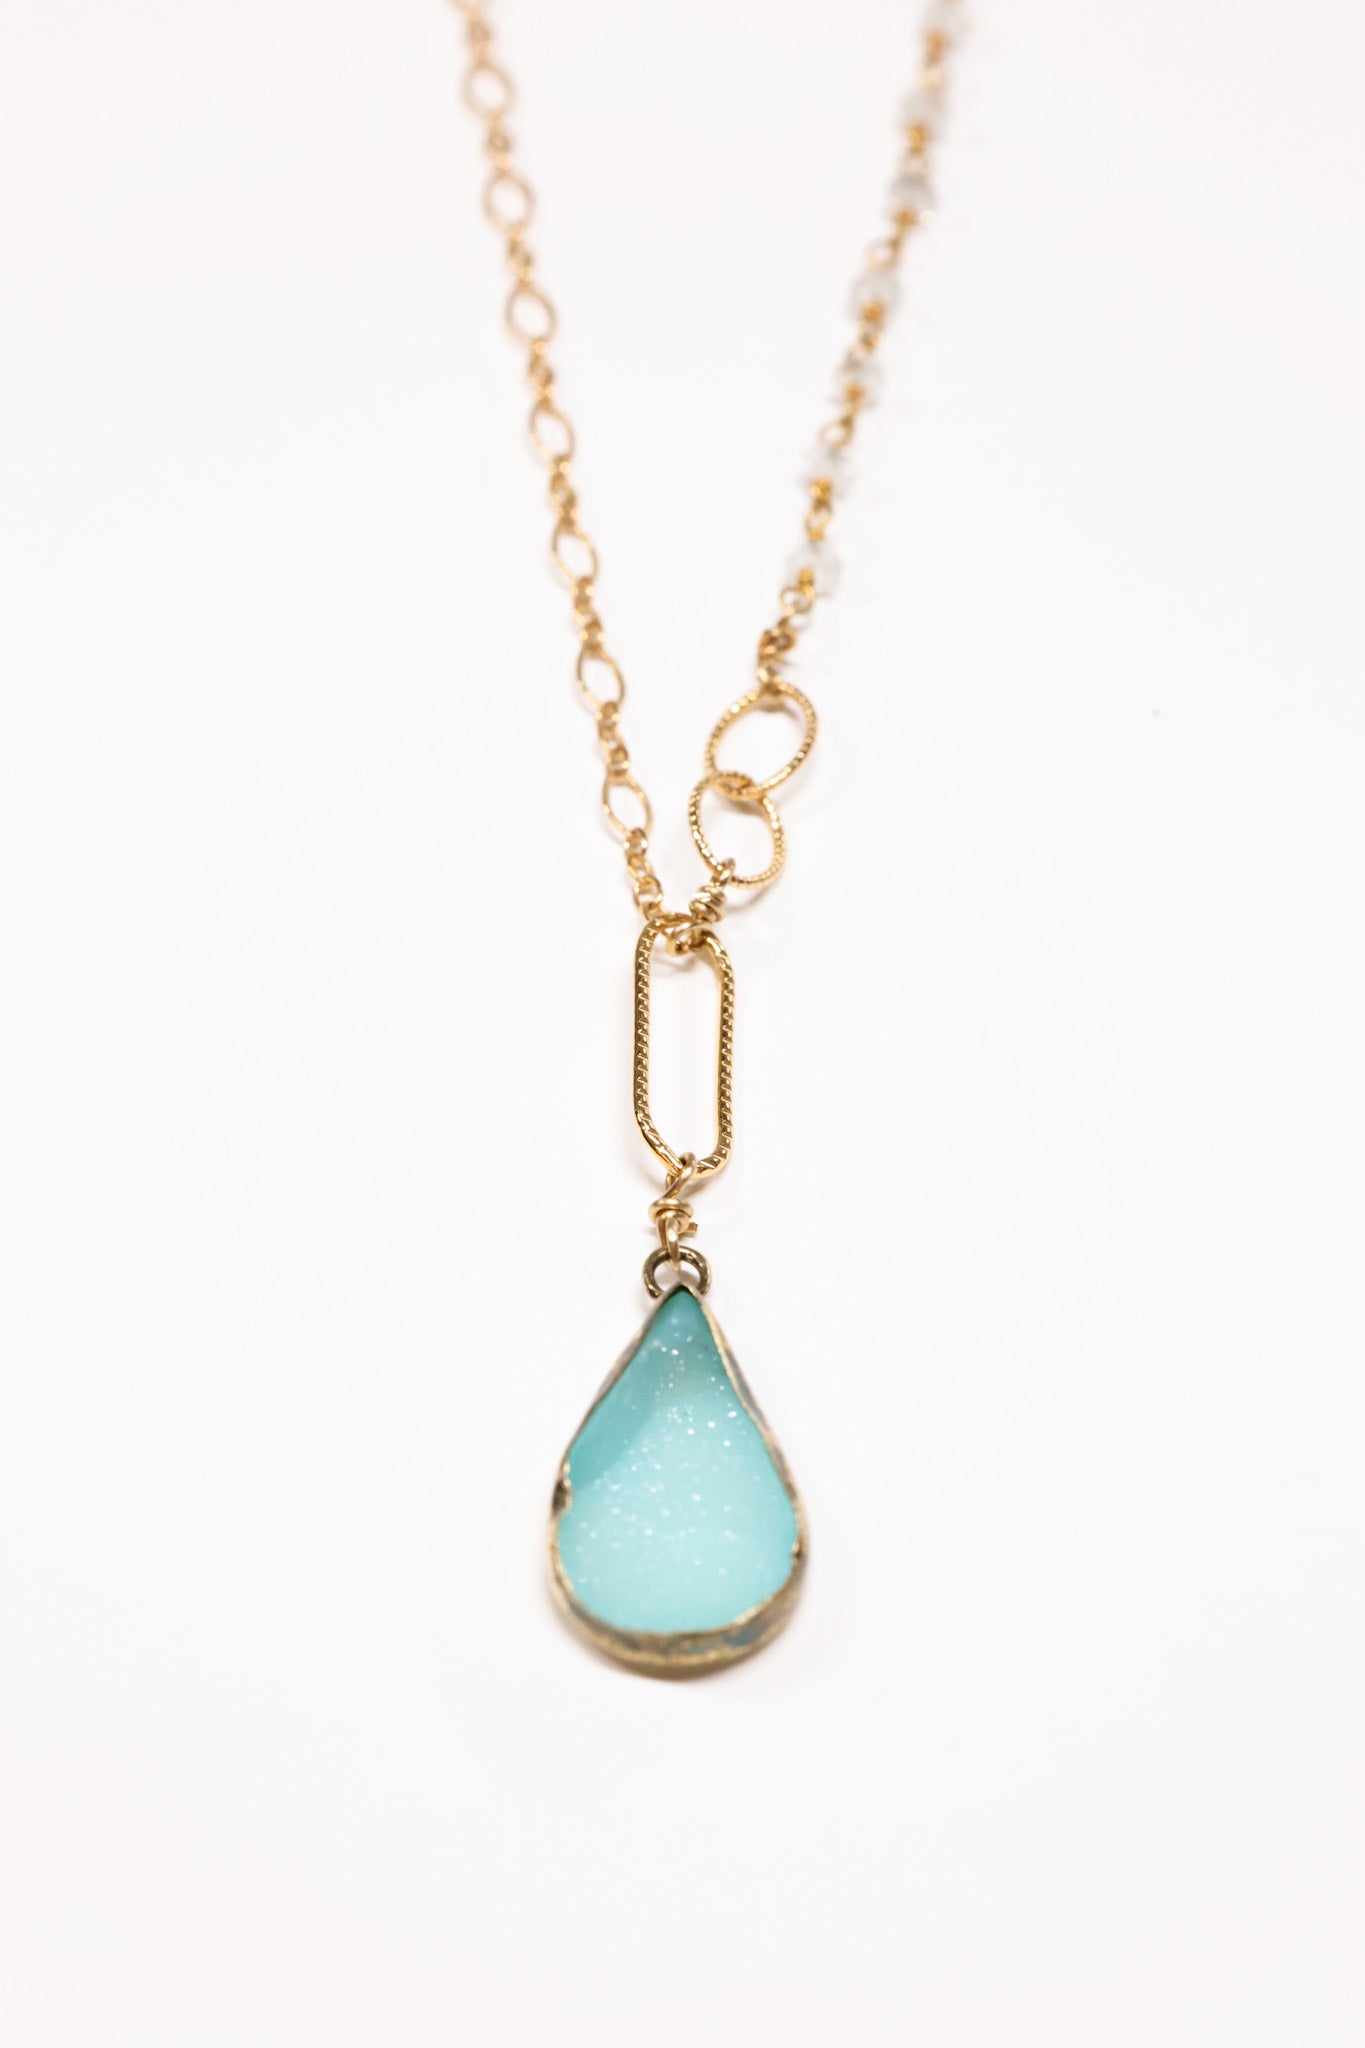 Aquamarine teardrop druzy with tiny quartz necklace flat lay.